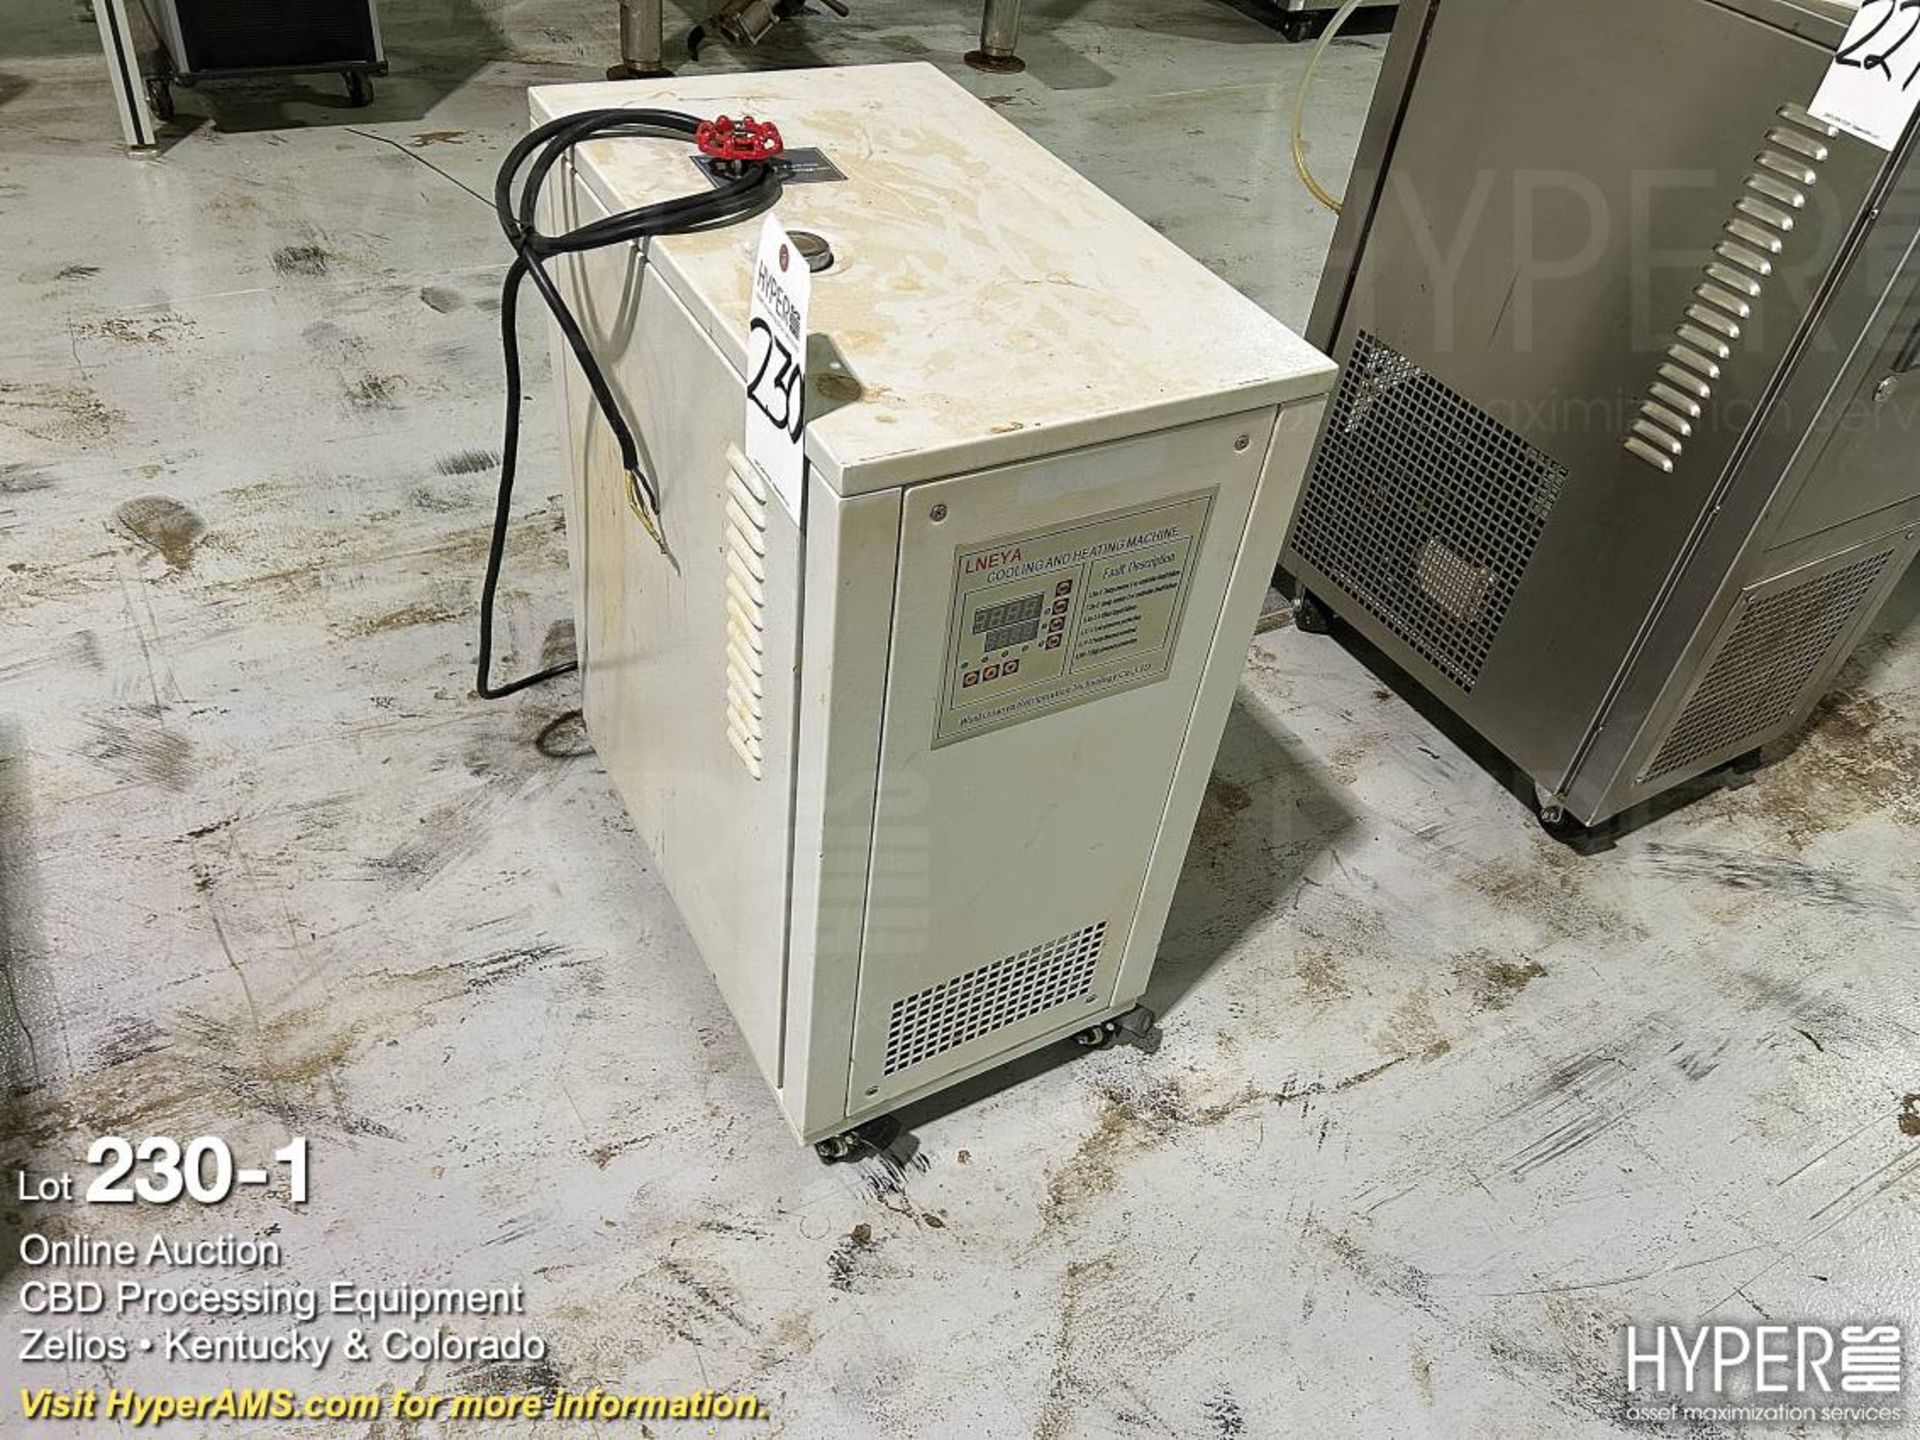 Lneya Model UC-182 Electric Chiller/Heater, S/n 81